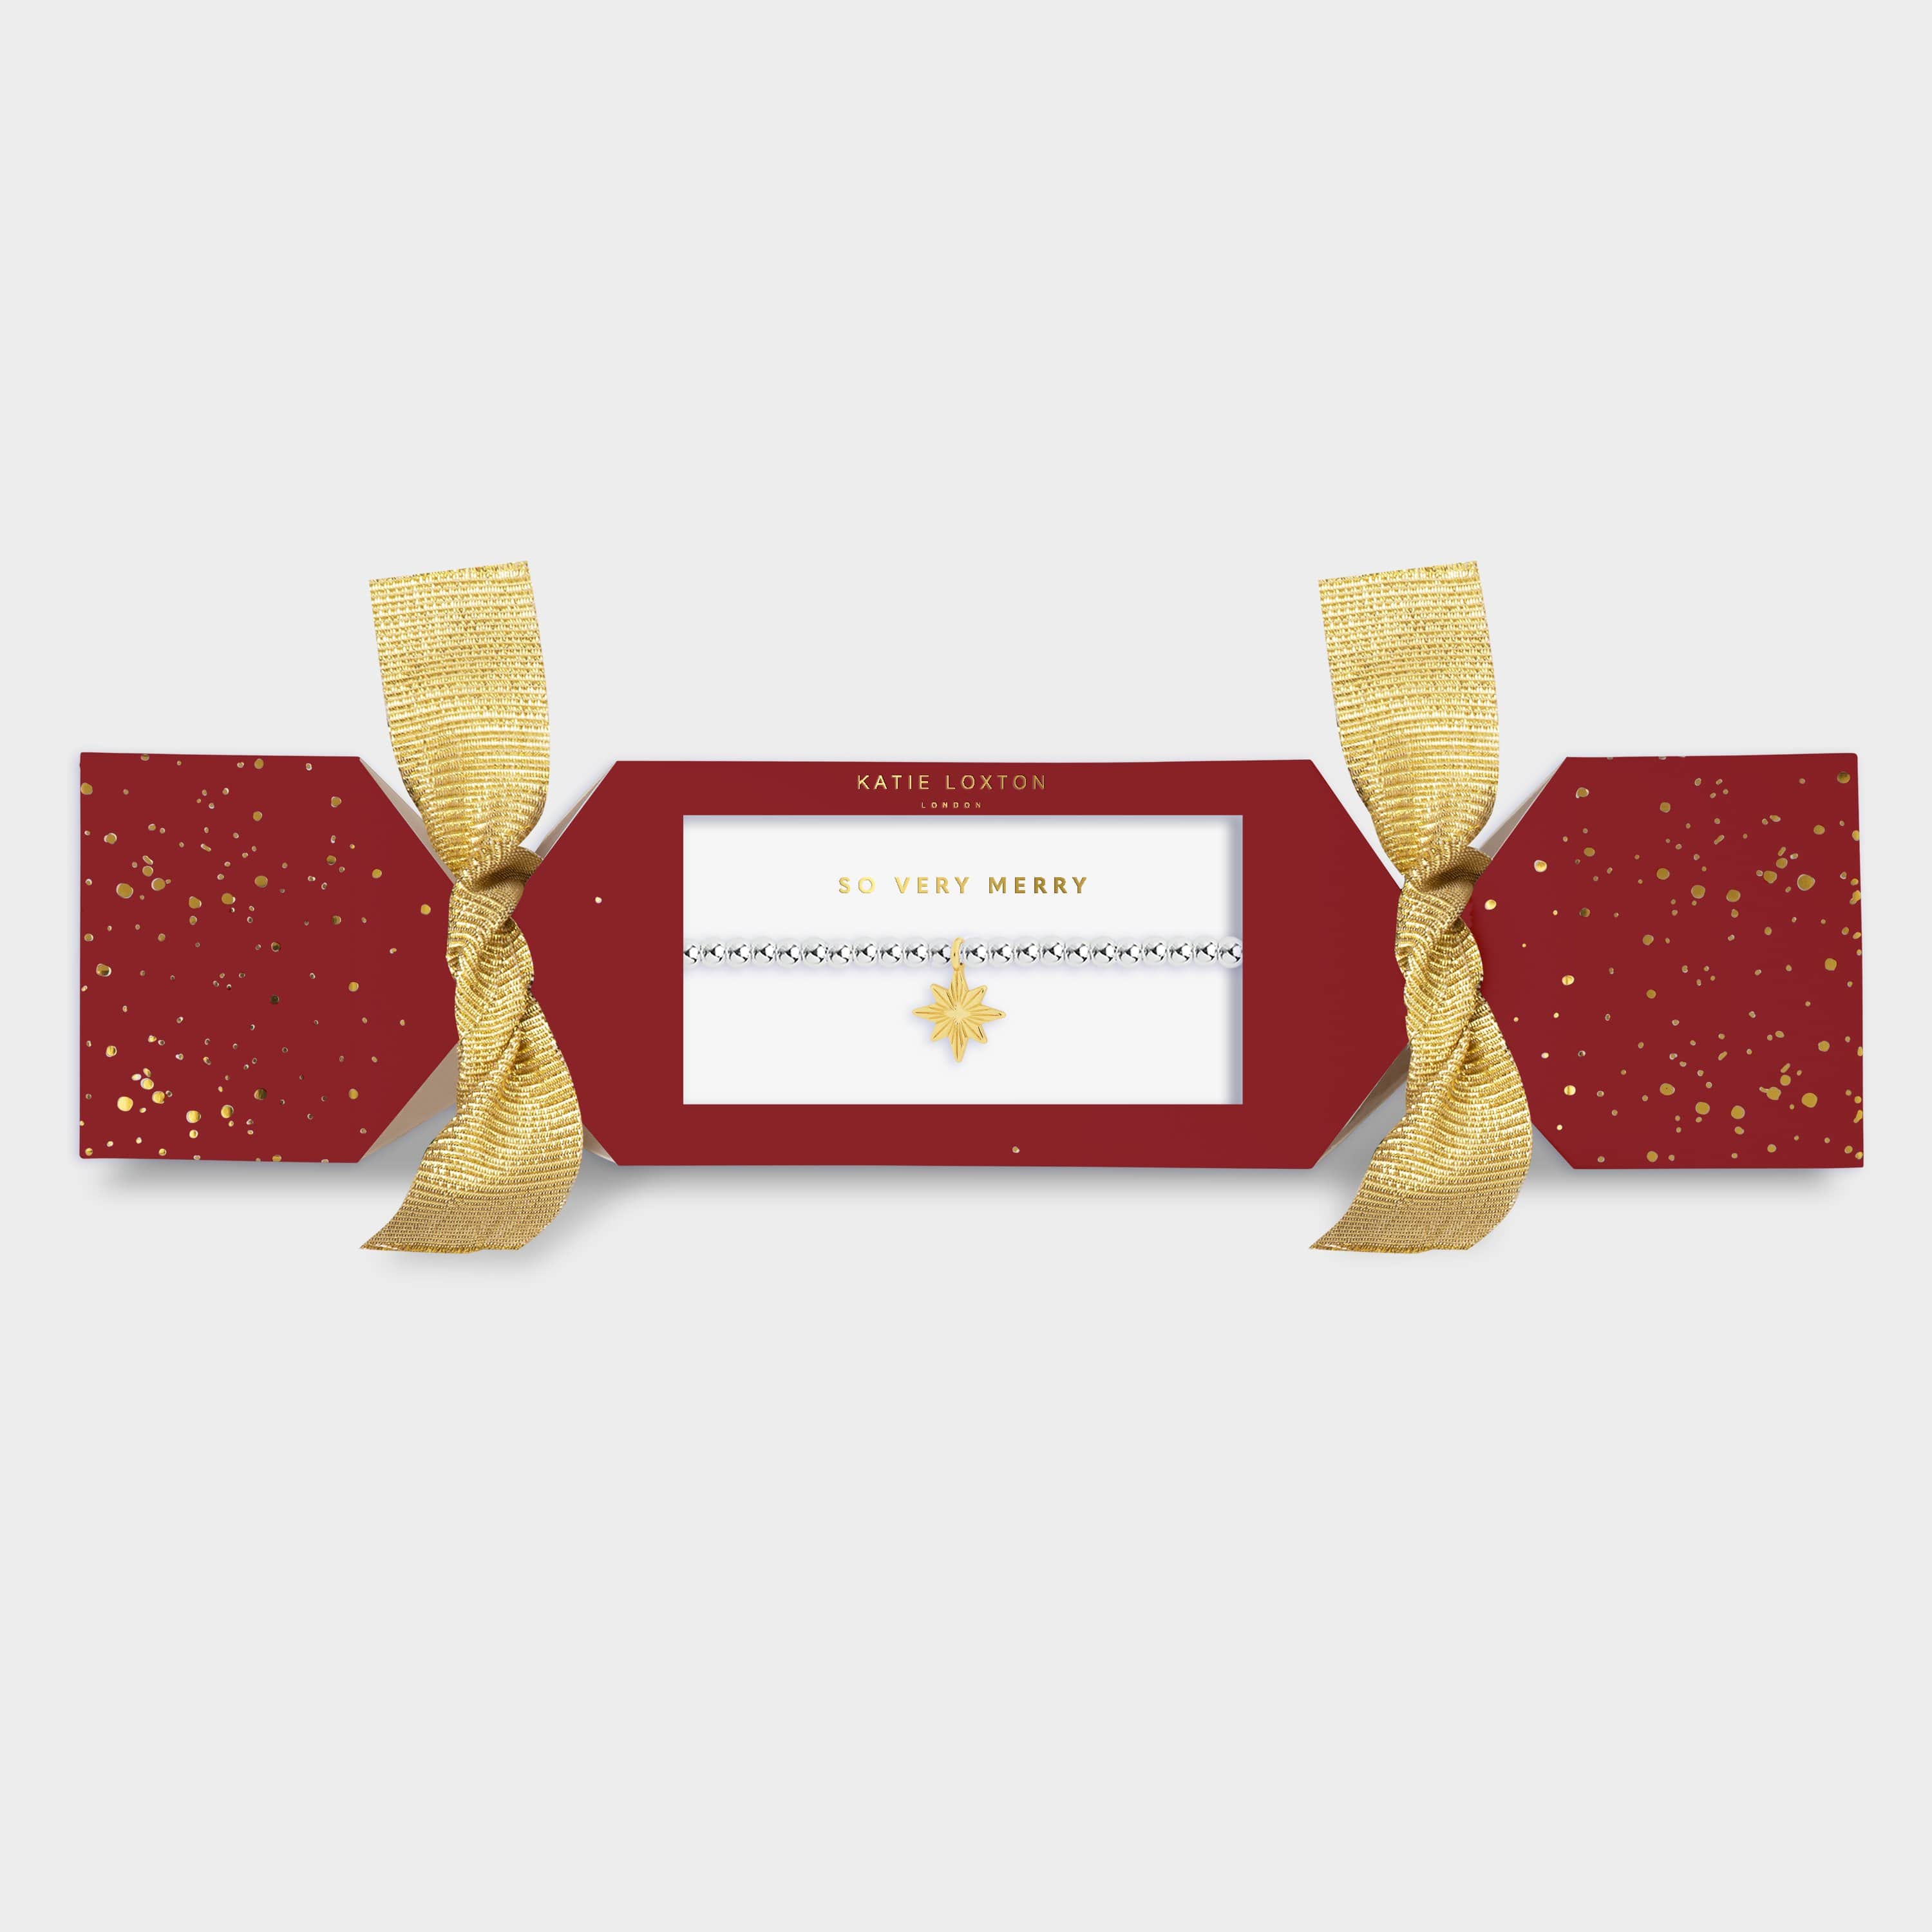 Katie Loxton Cracker Gift Bracelet Katie Loxton Christmas Cracker Gift Box - So Very Merry